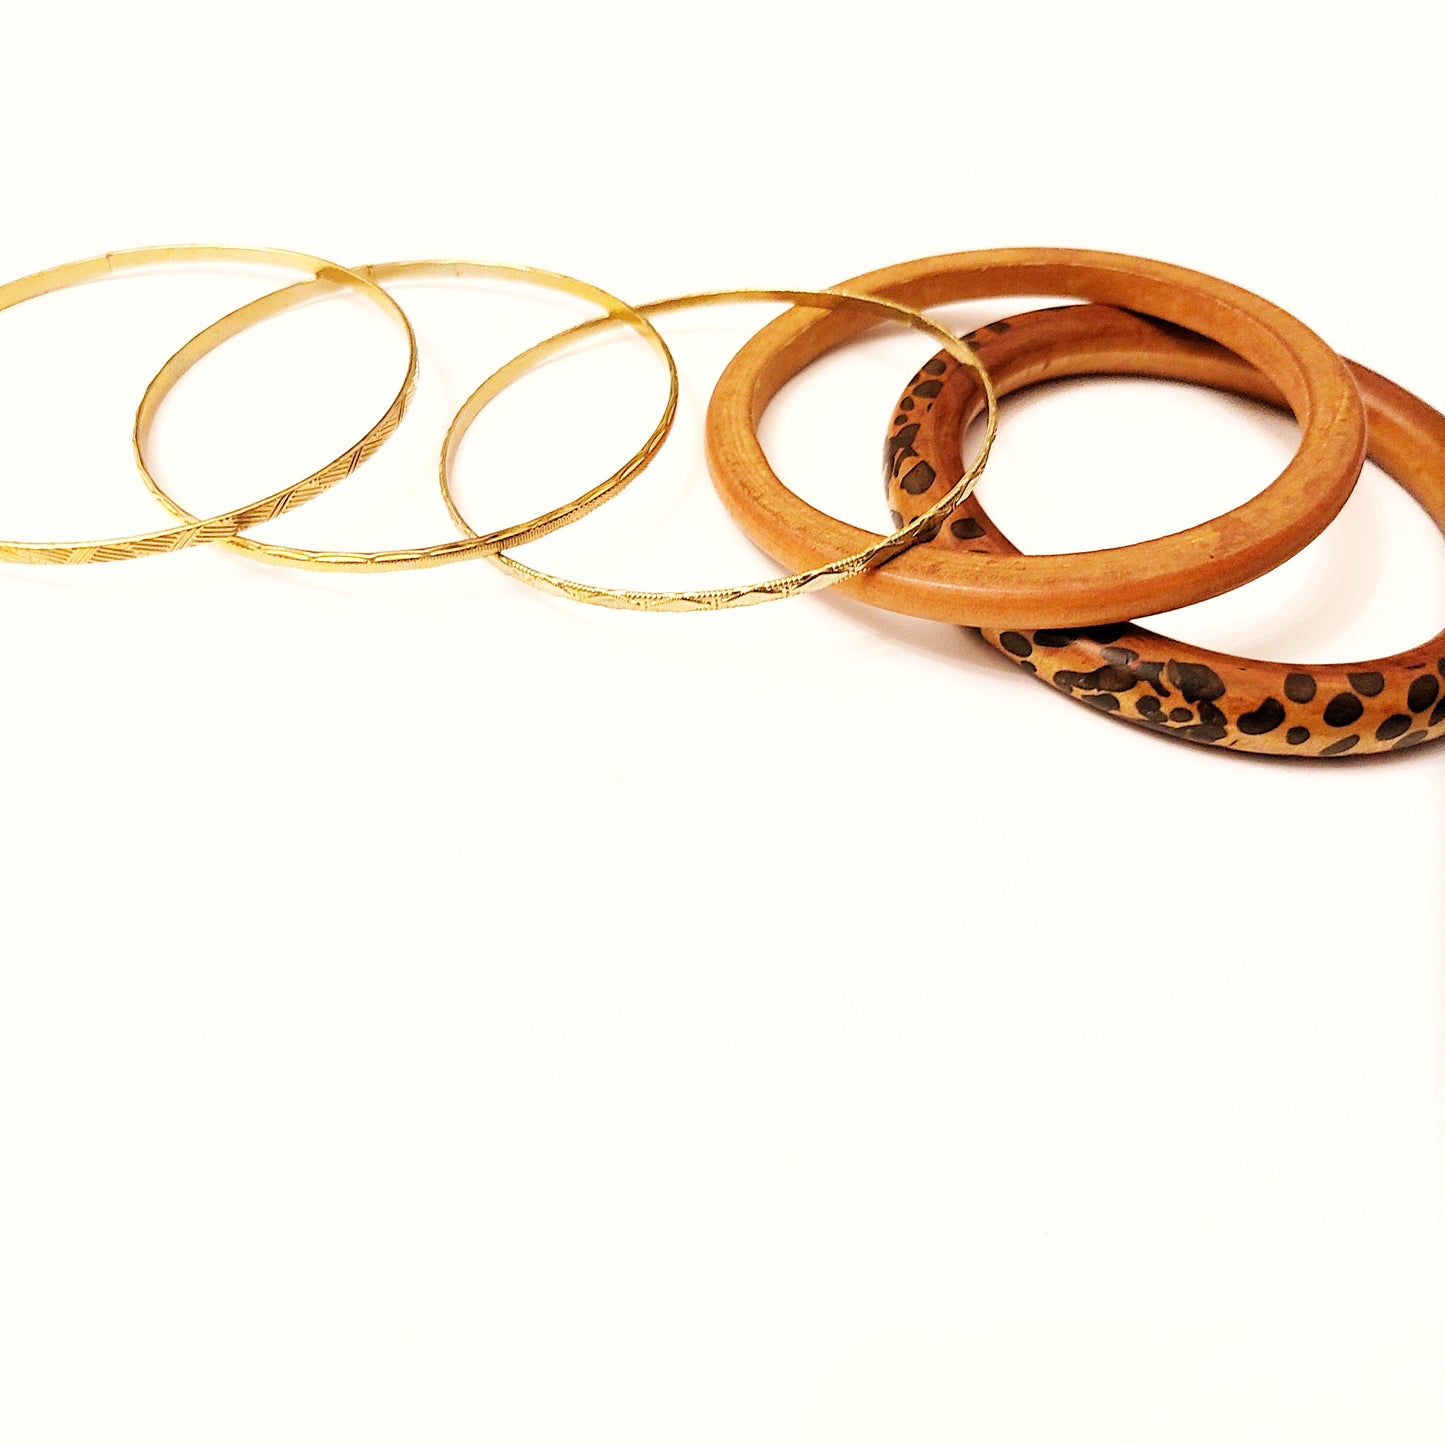 Melany Gold And Wooden Bracelet Set - Didi Royale